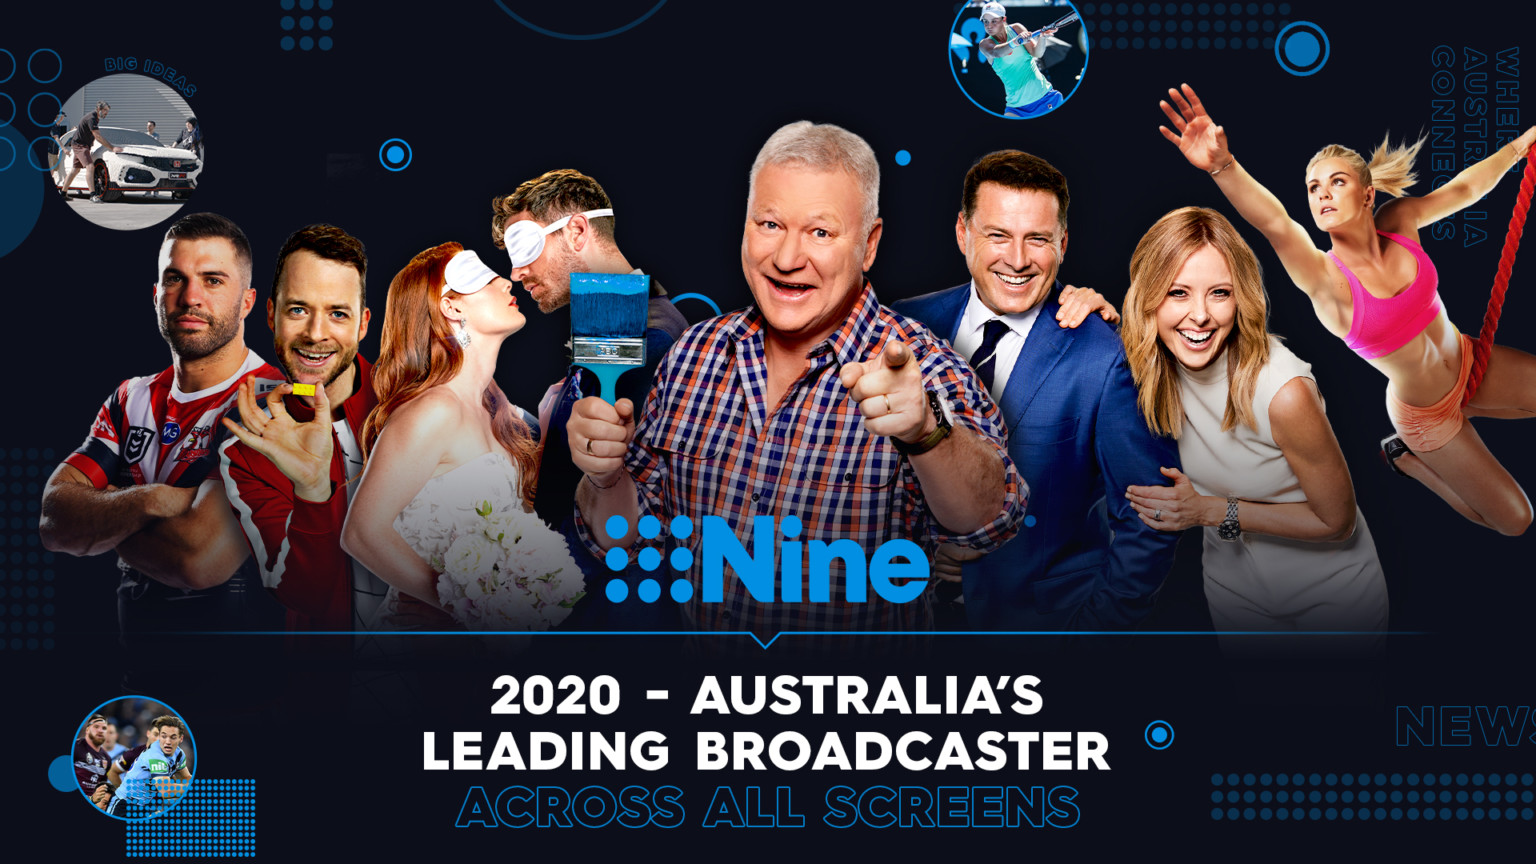 Nine is Australia's leading broadcaster across all screens Nine for